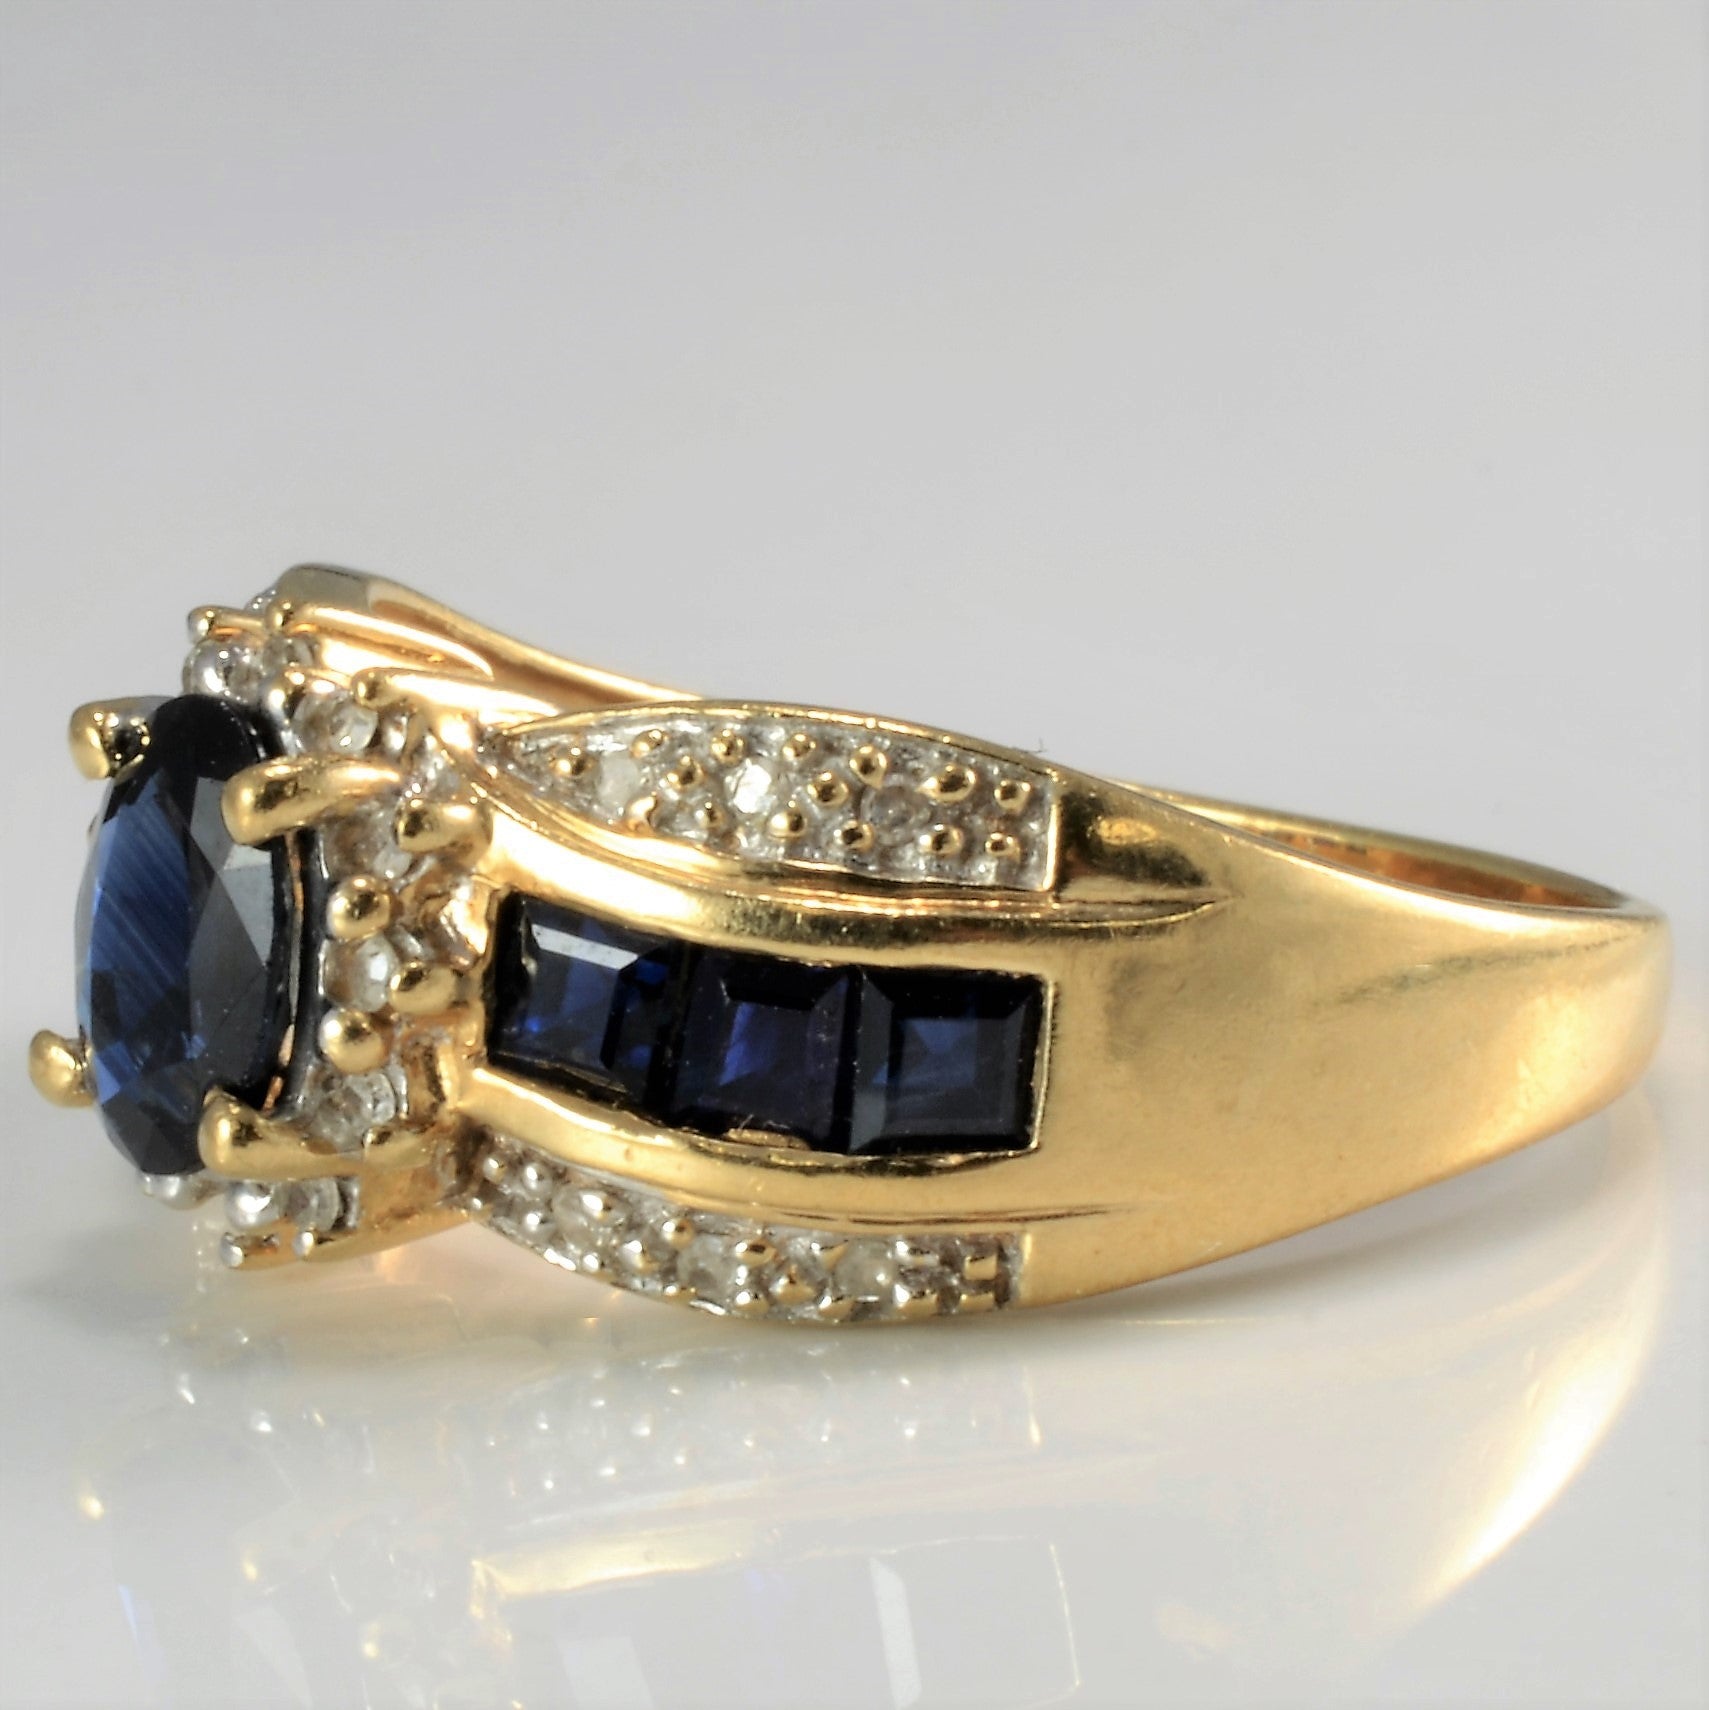 Fancy Sapphire & Diamond Cocktail Ring | 0.12 ctw, SZ 8.75 |